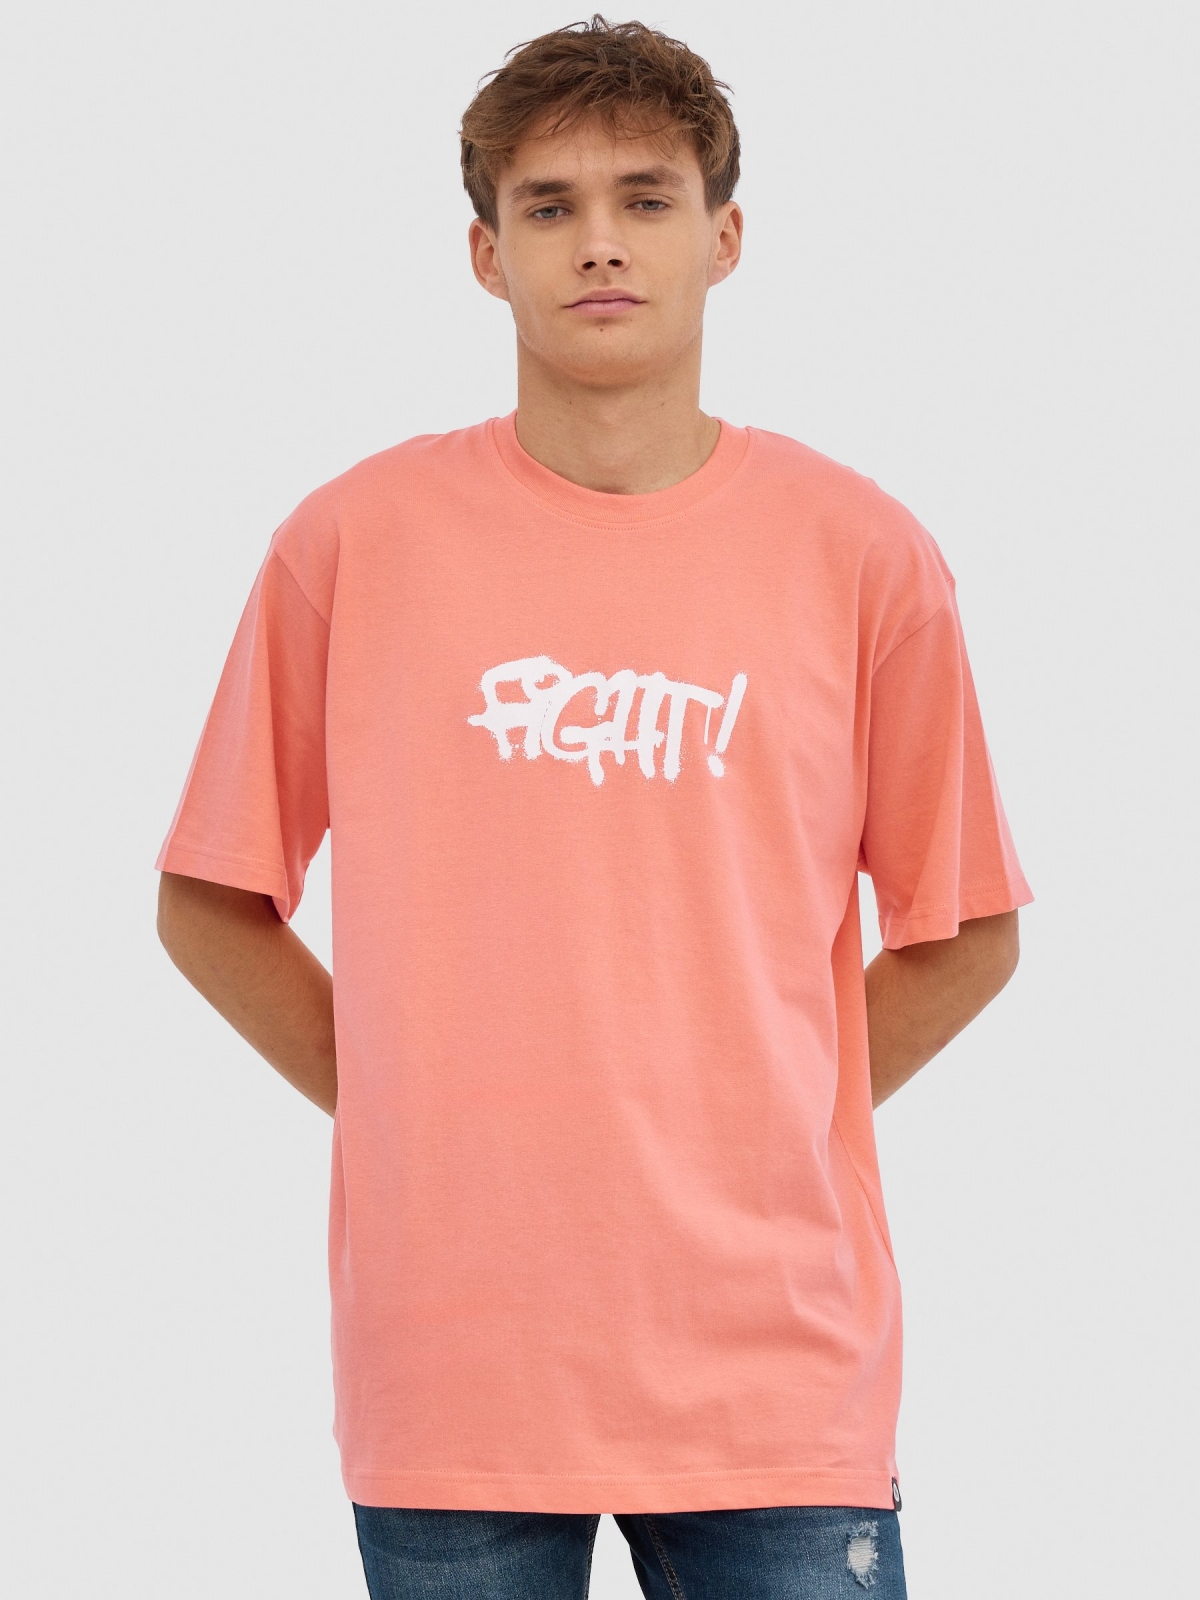 Camiseta Fight! rosa vista media frontal